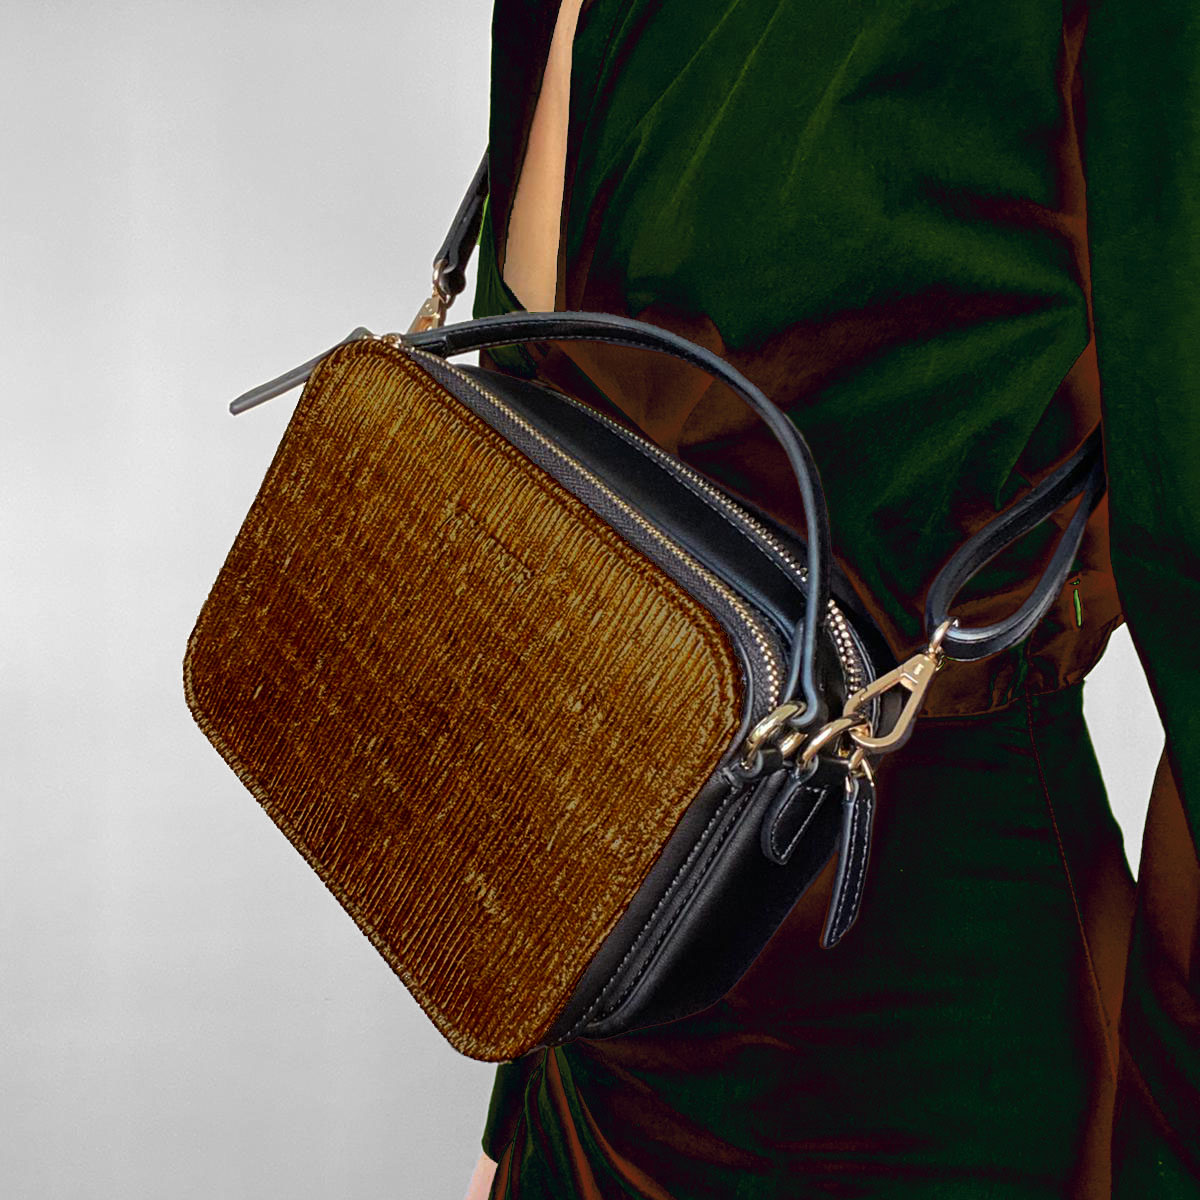 CANDY_styleCover Katy Mercury 2in1 bag set TaschenSet with Pouch_black_ metallic Wechselklappe bronze